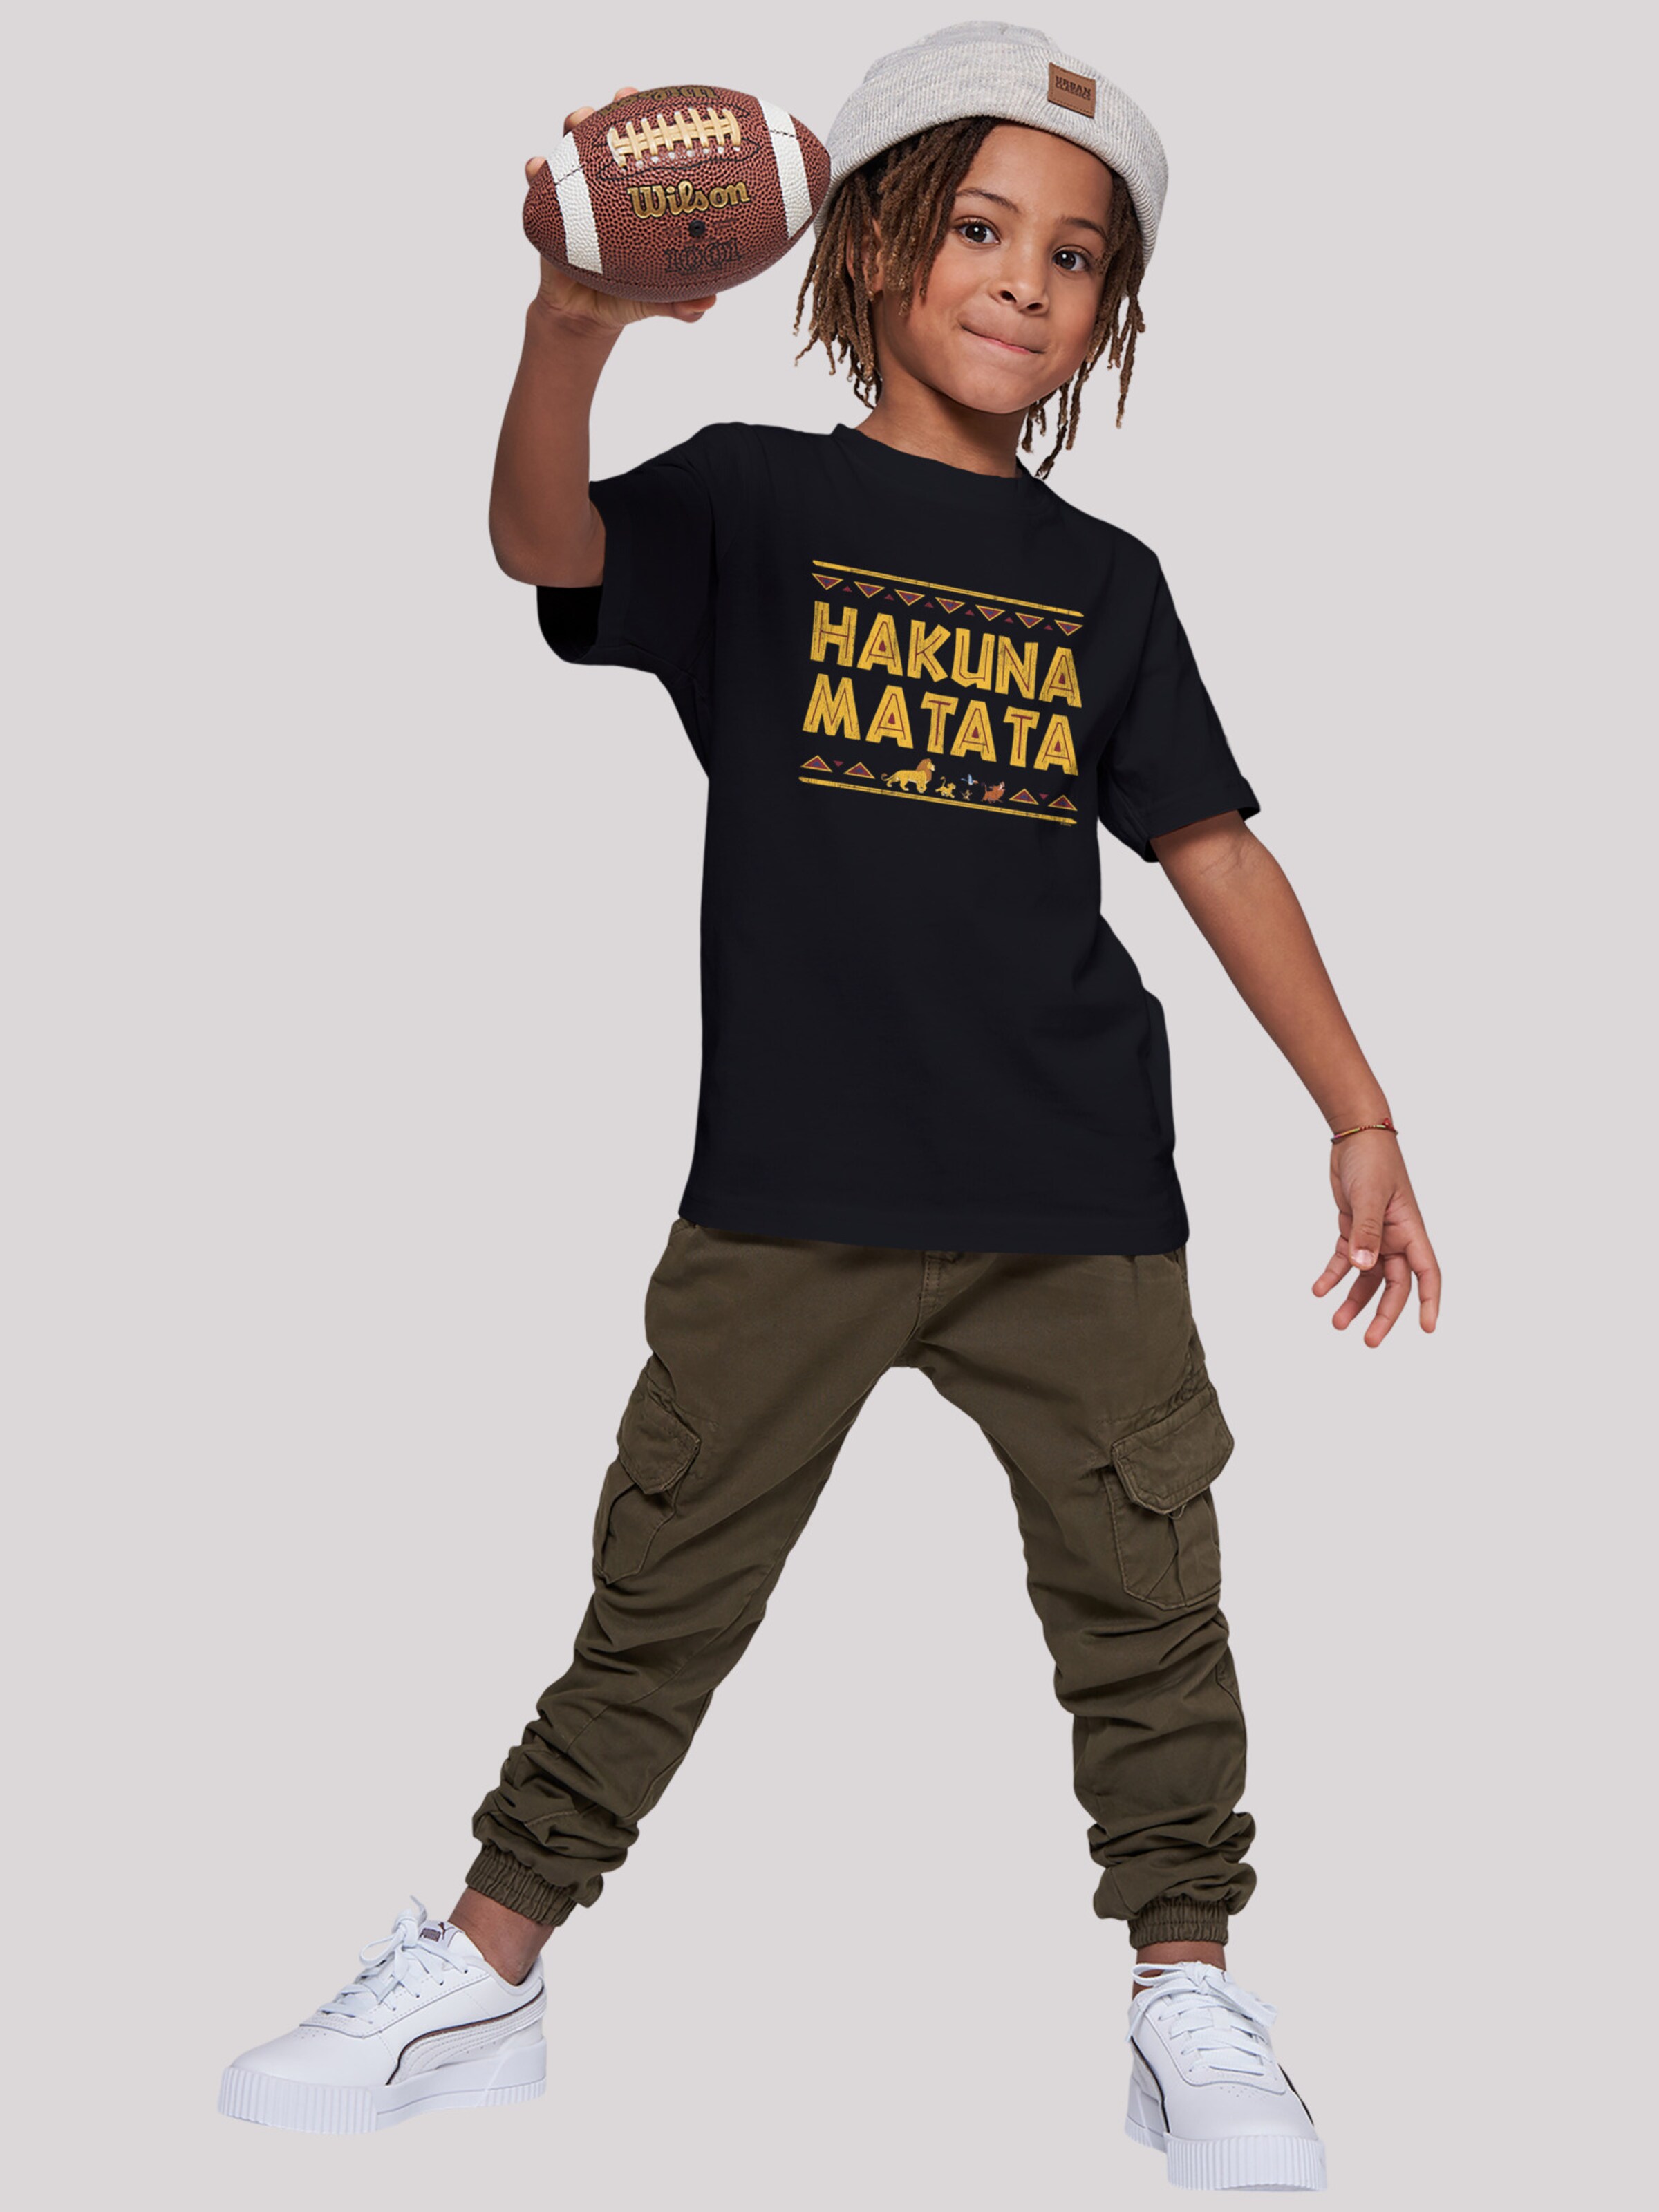 Hakuna | Löwen König ABOUT YOU der Shirt F4NT4STIC Black in \'Disney Matata\'